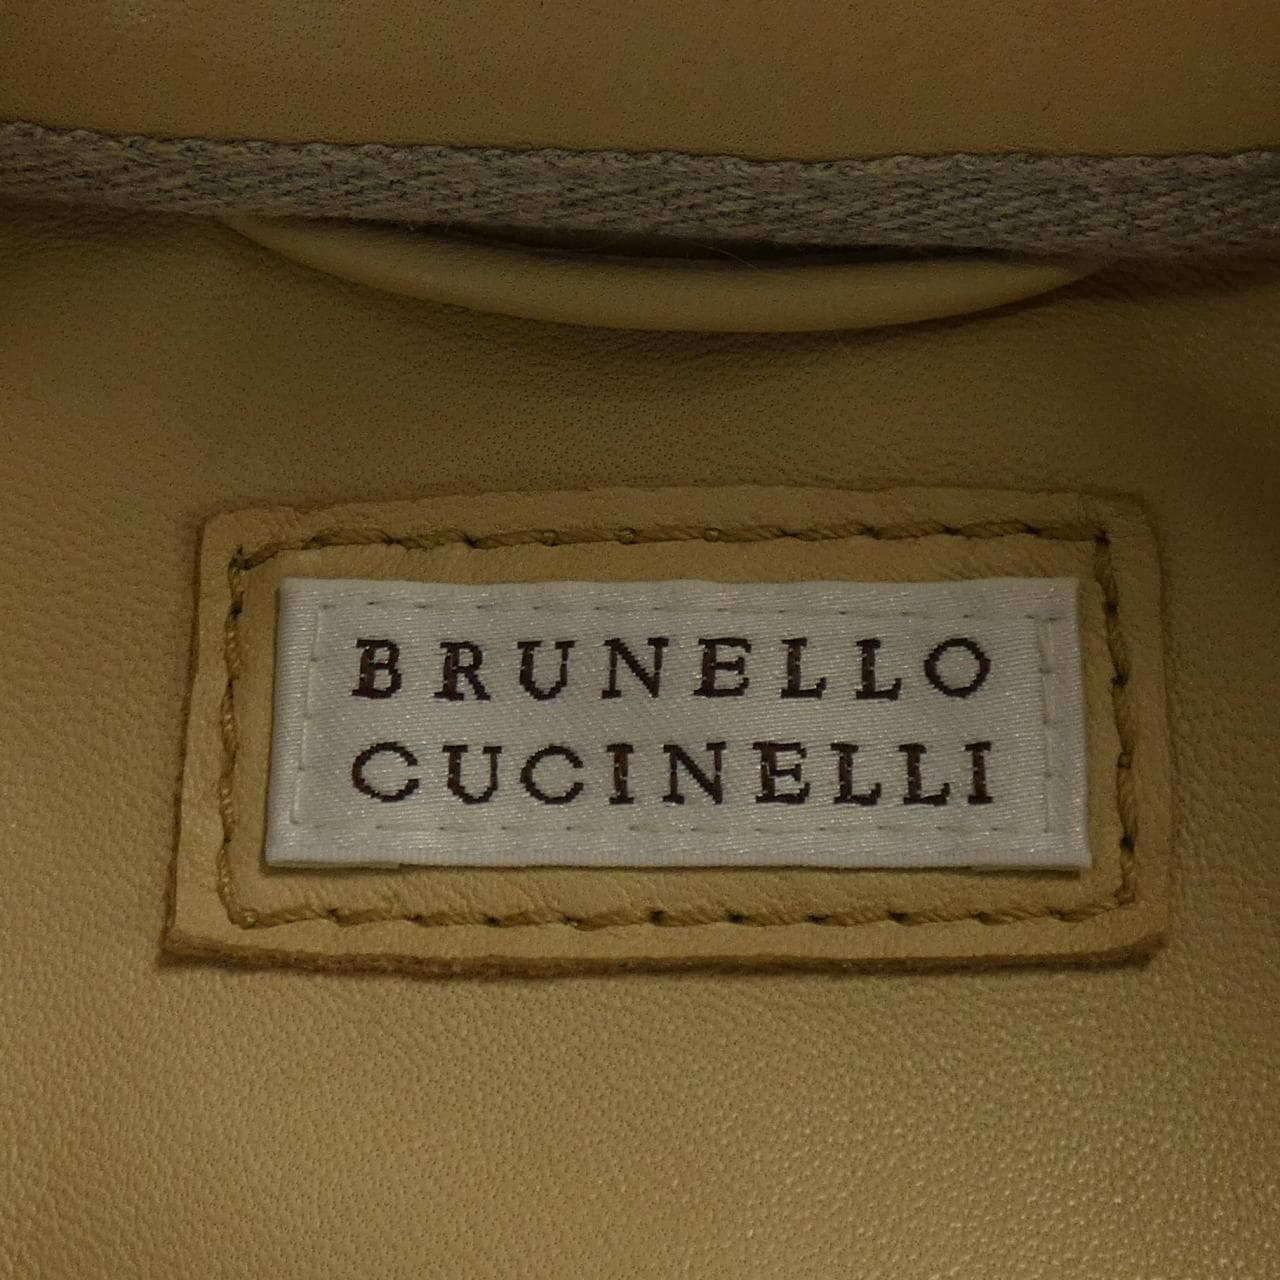 BRUNELLO CUCINELLI CUCINELLI leather jacket